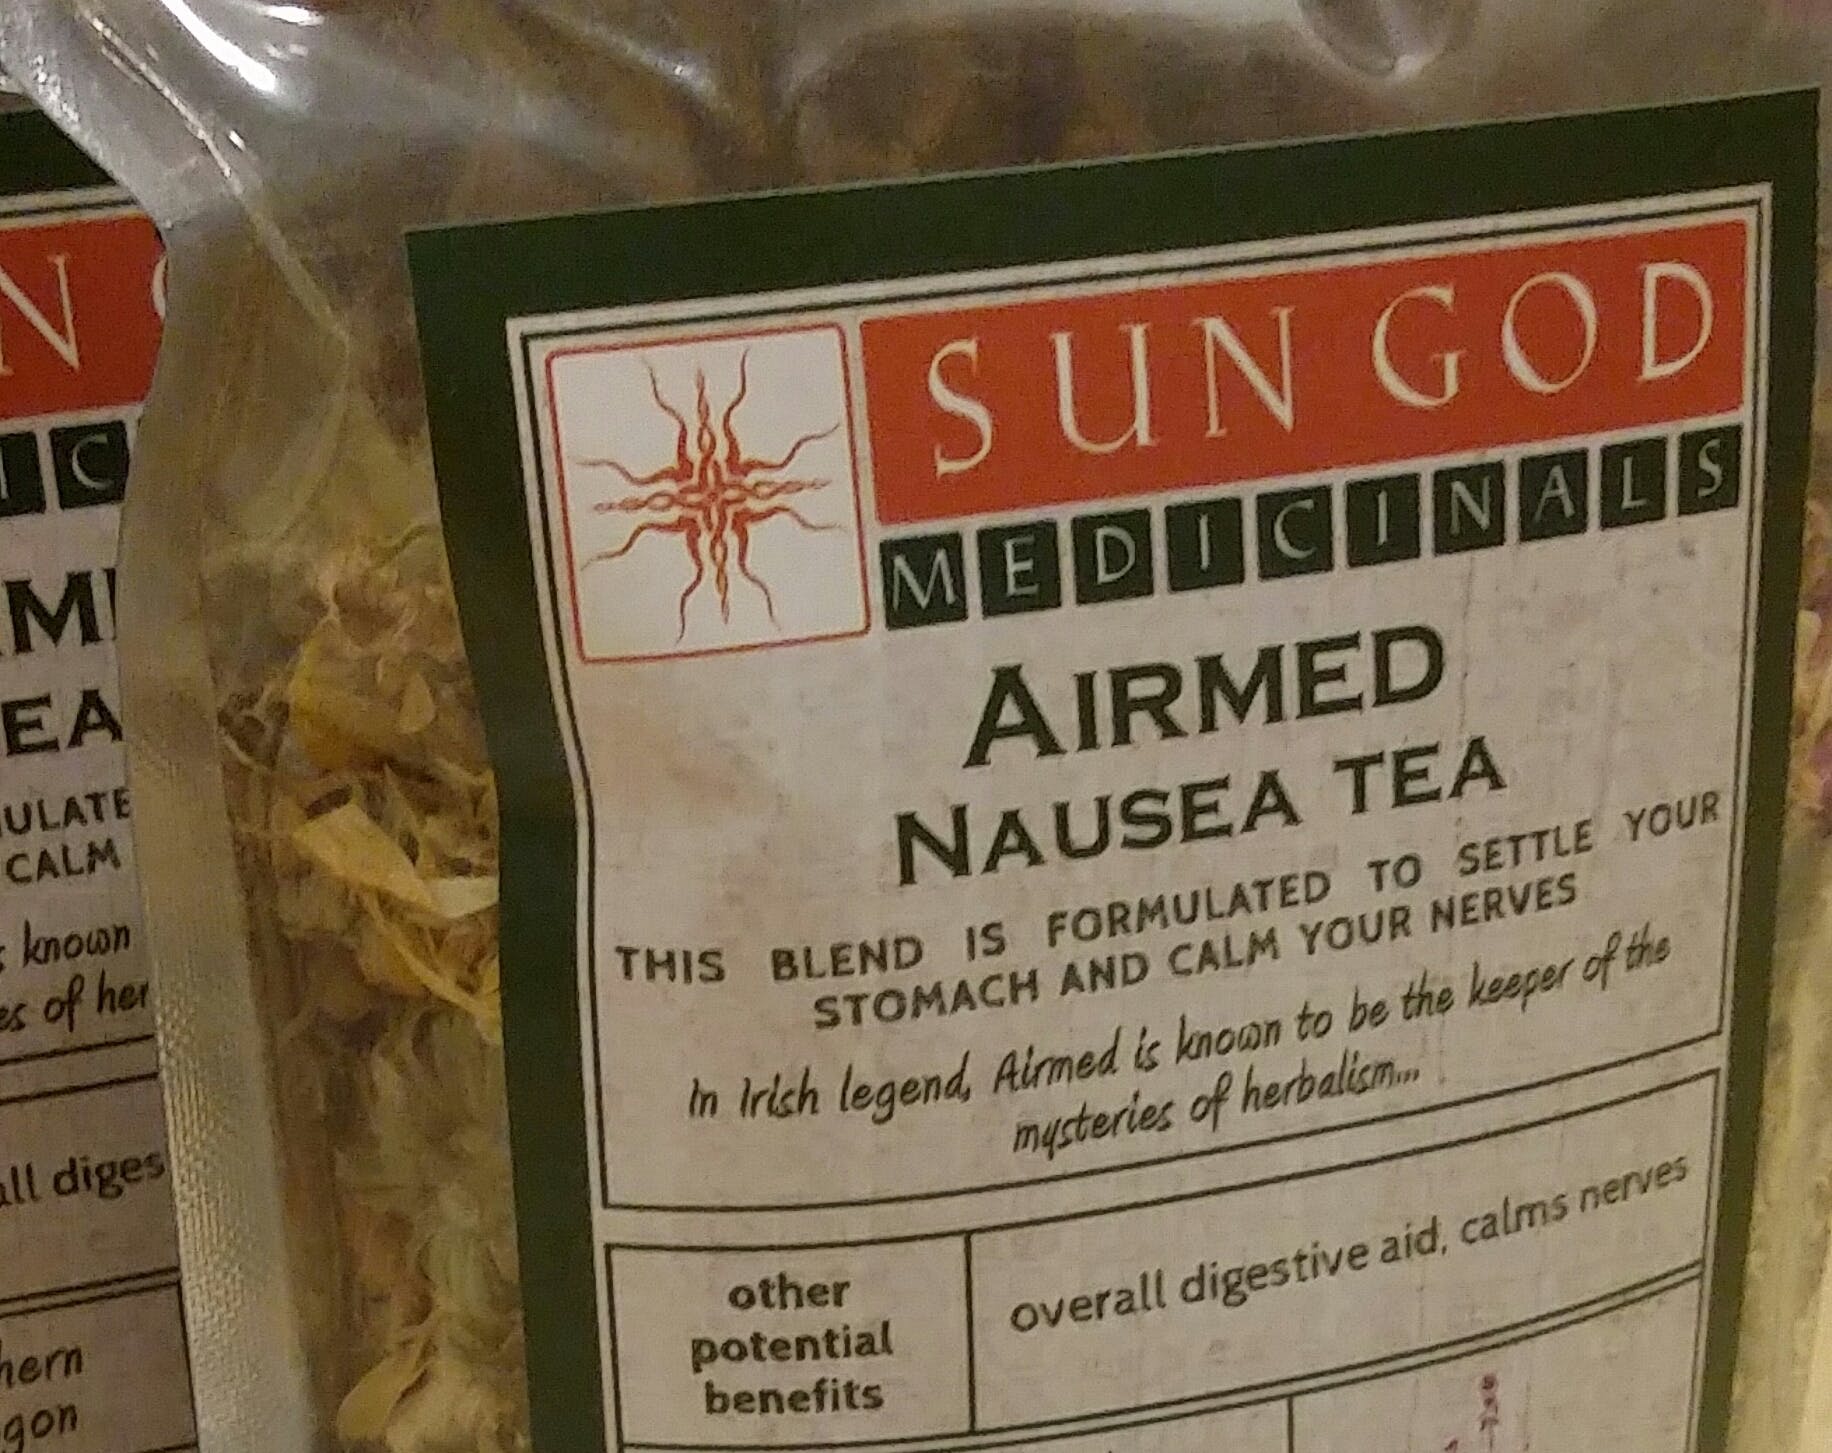 edible-sun-god-medicinals-airmed-nausea-tea